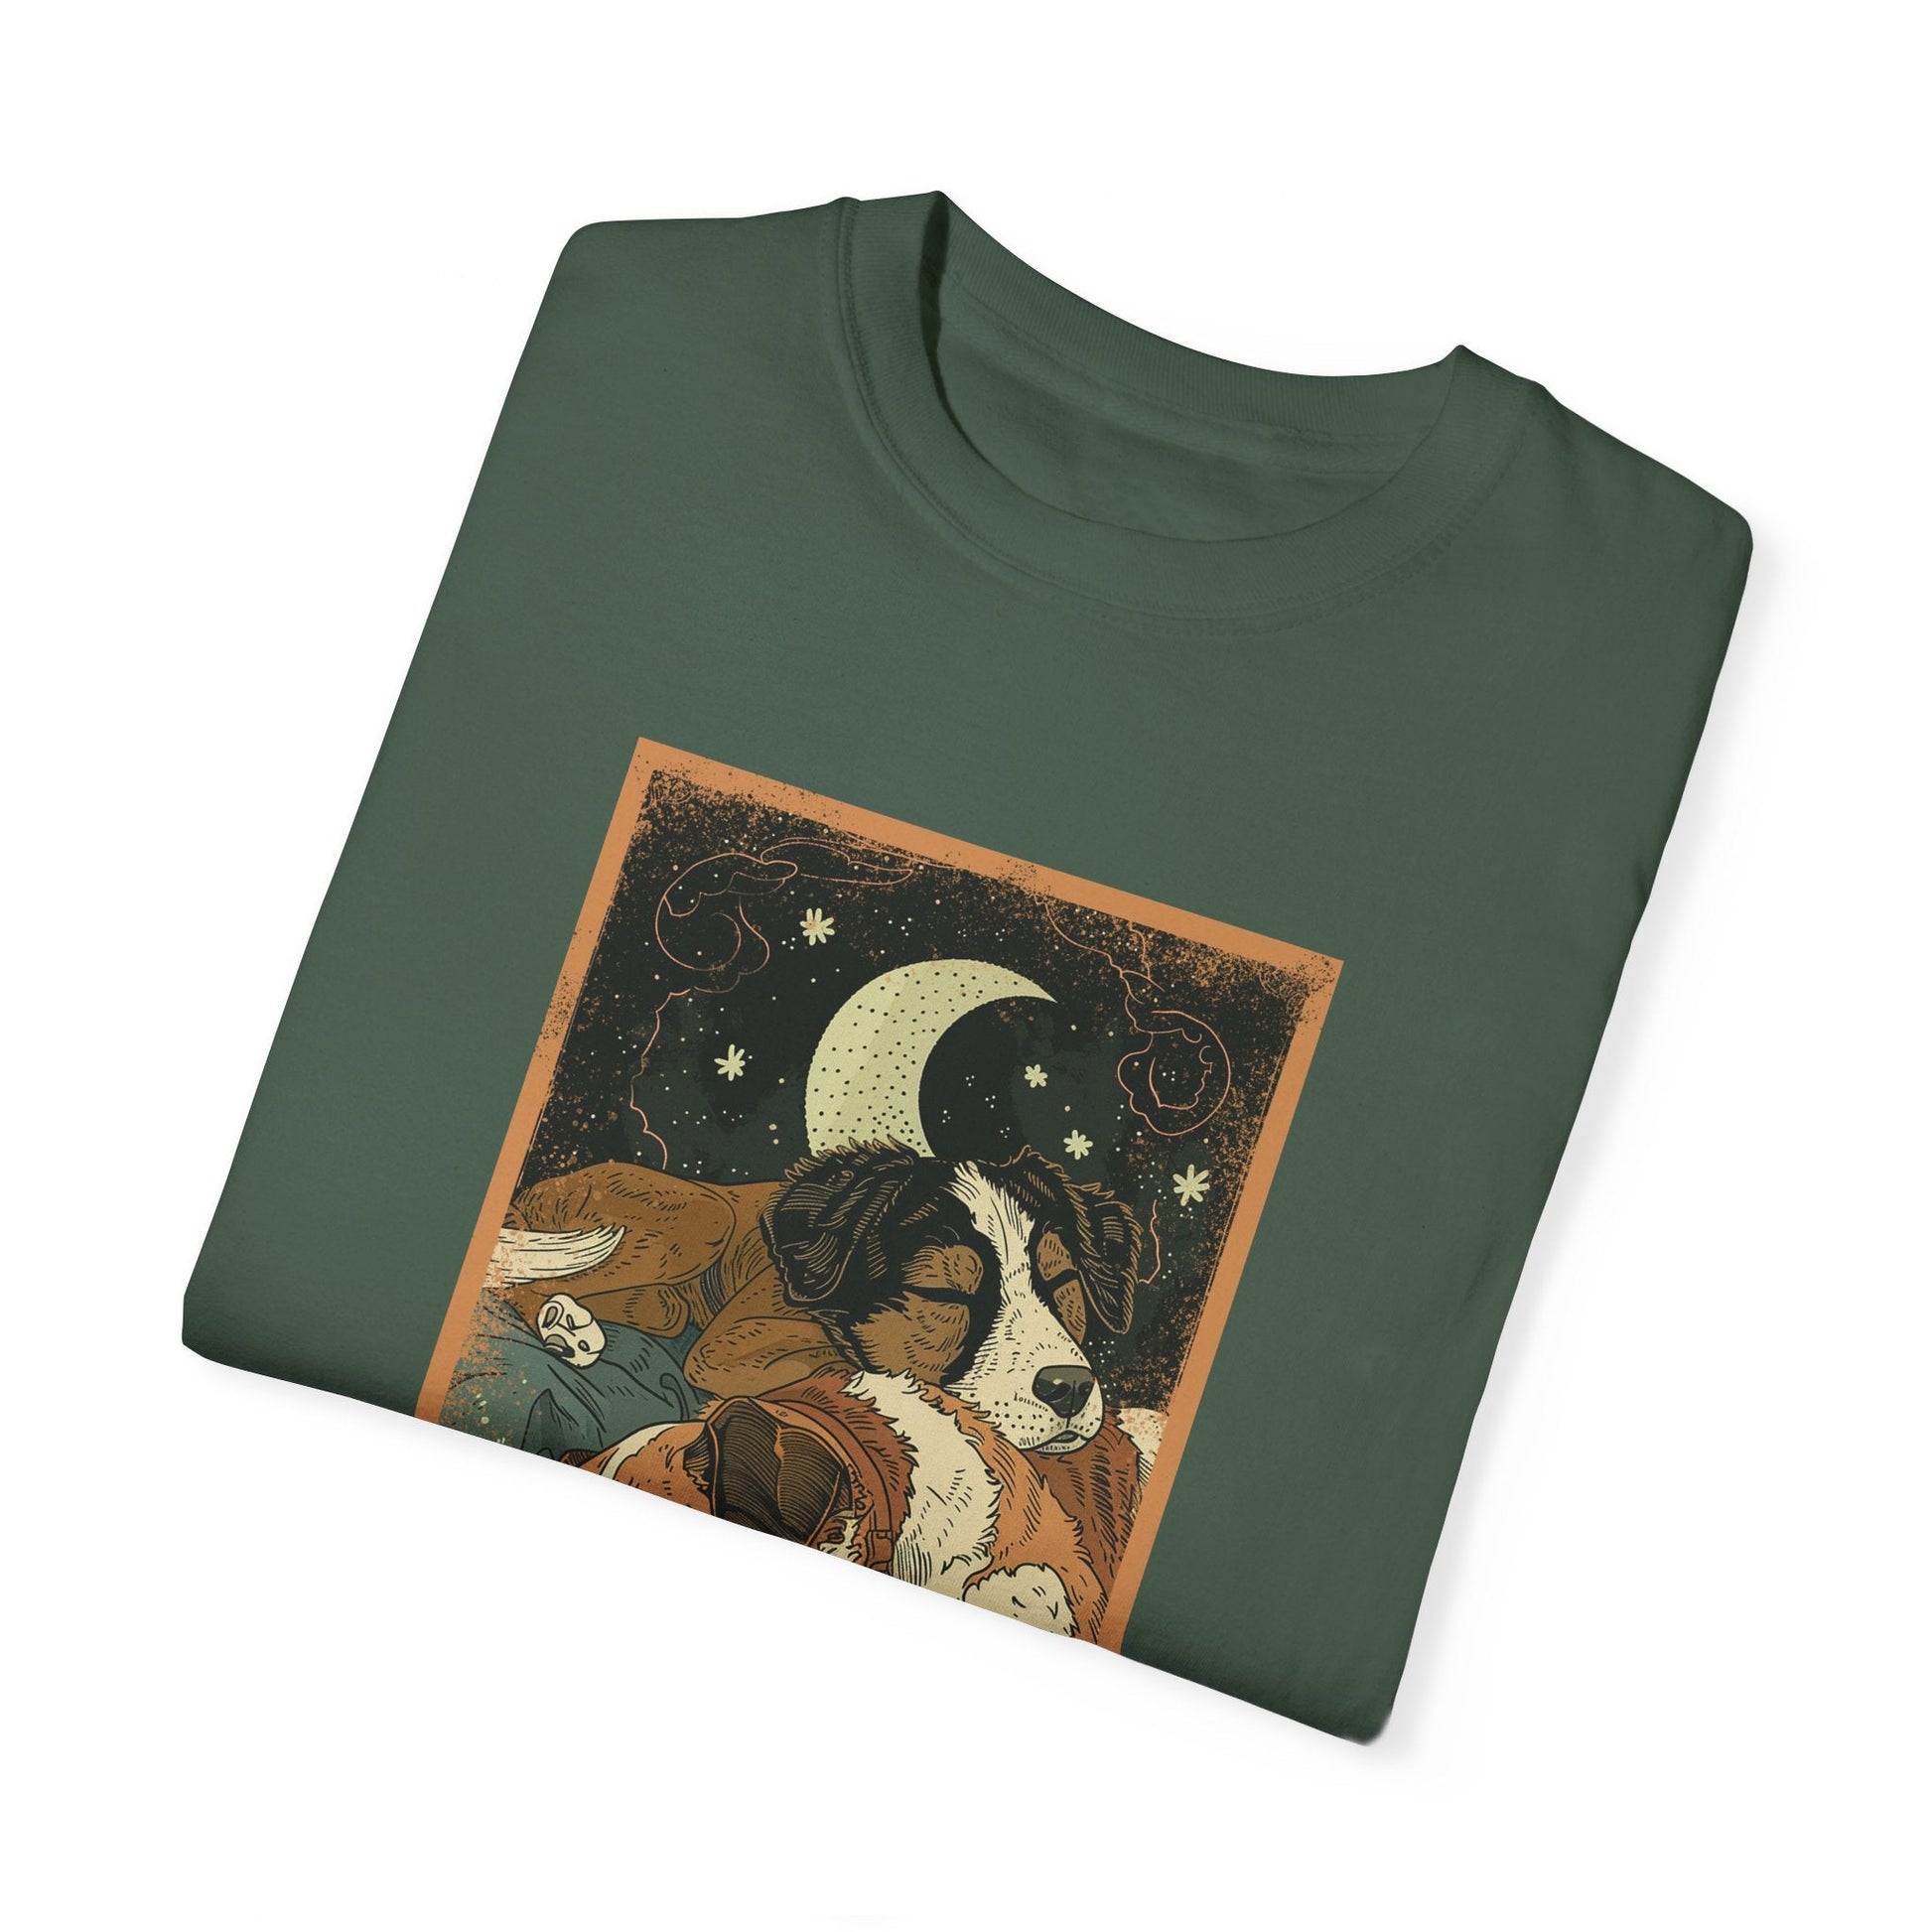 Vintage Style Dog T - shirt, Two Dogs Sleeping Shirt, Oversized Unisex, Comfort Colors Cotton - FlooredByArt